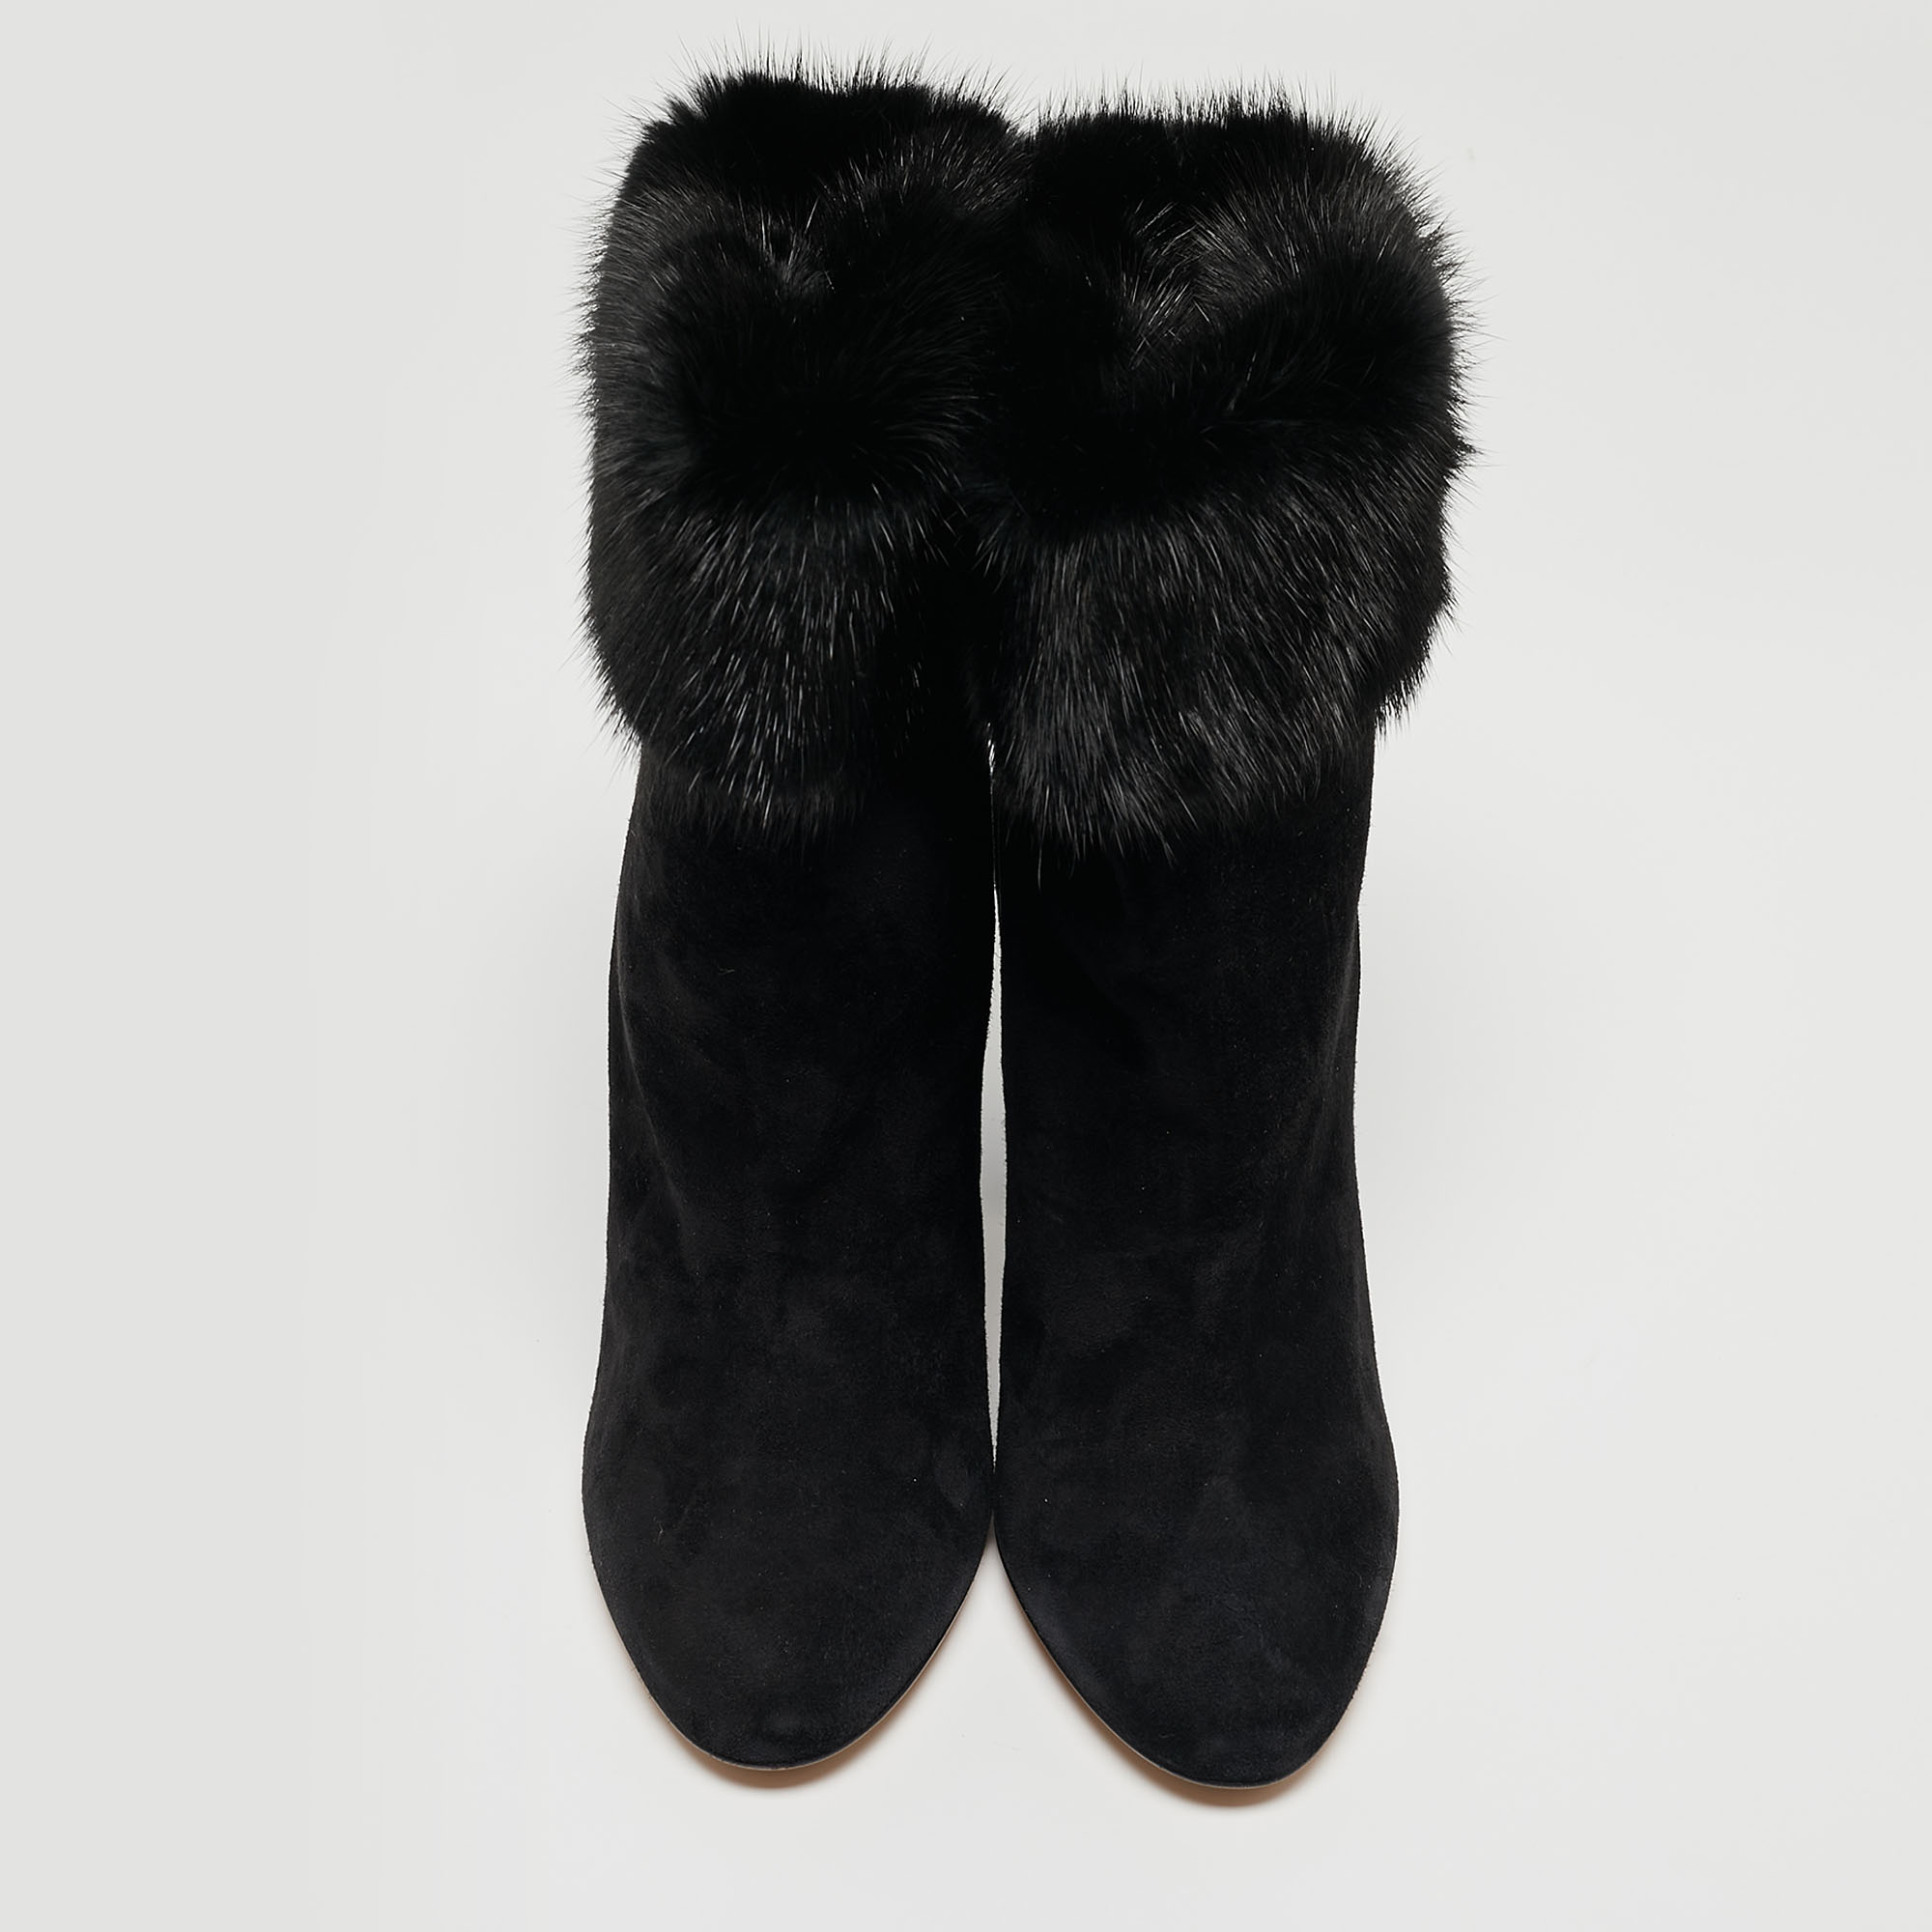 Salvatore Ferragamo Black Suede And Fur Loris Ankle Boots Size 40